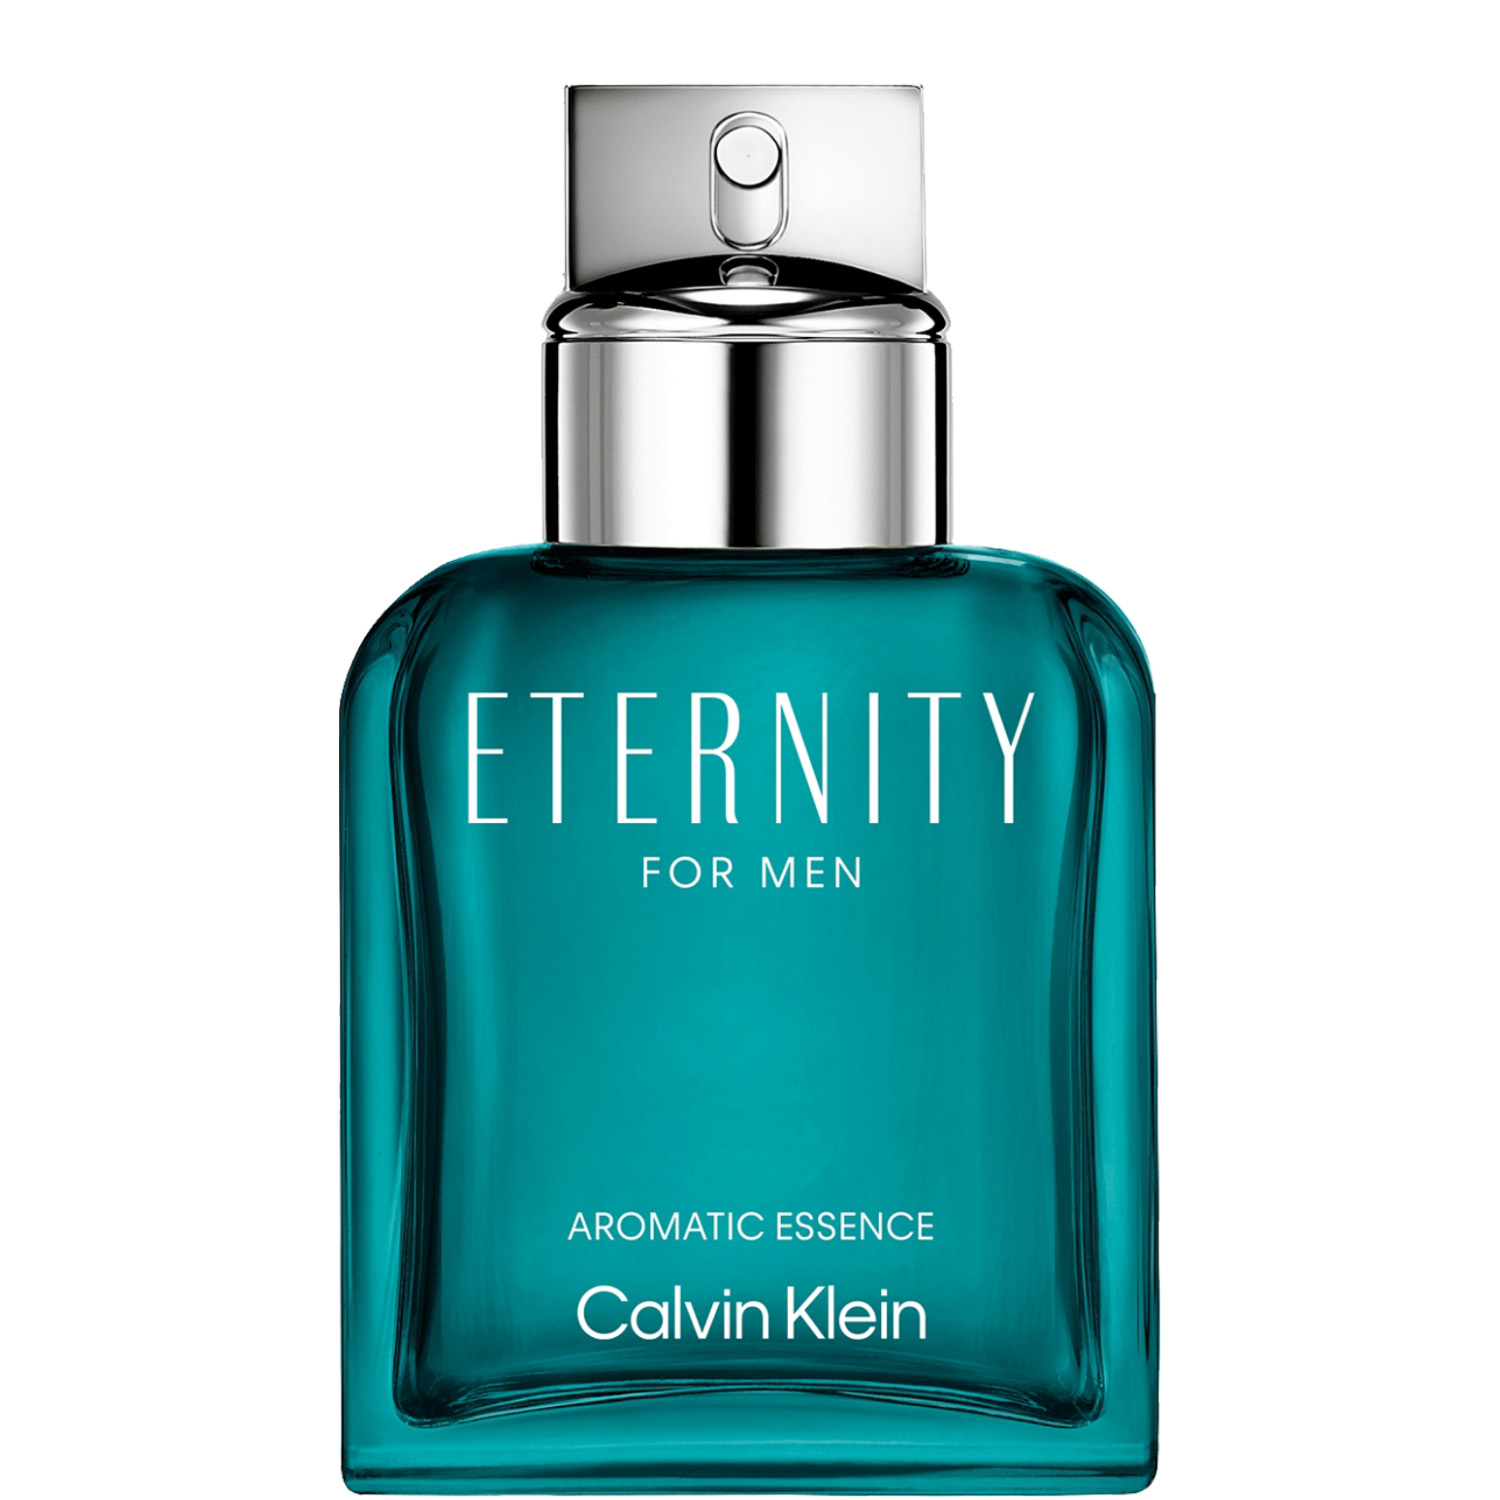 Calvin Klein Eternity Aromatic Essence for Men Parfum